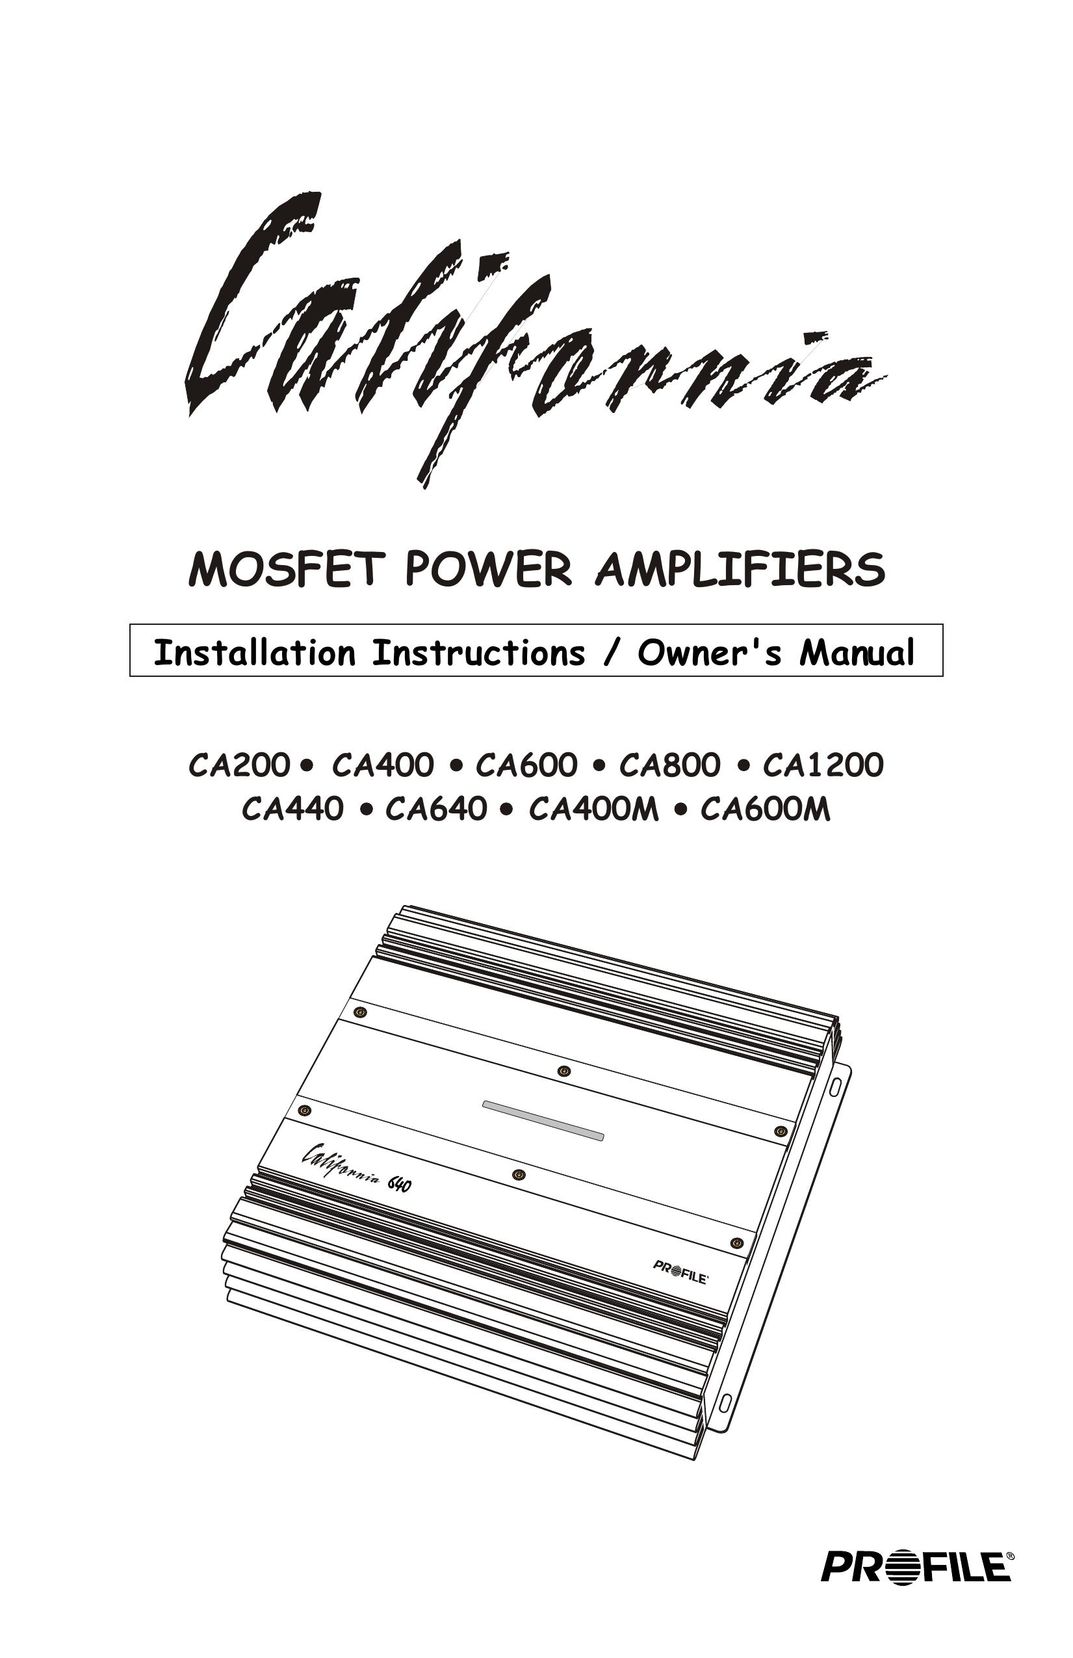 Profile CA600M Stereo Amplifier User Manual